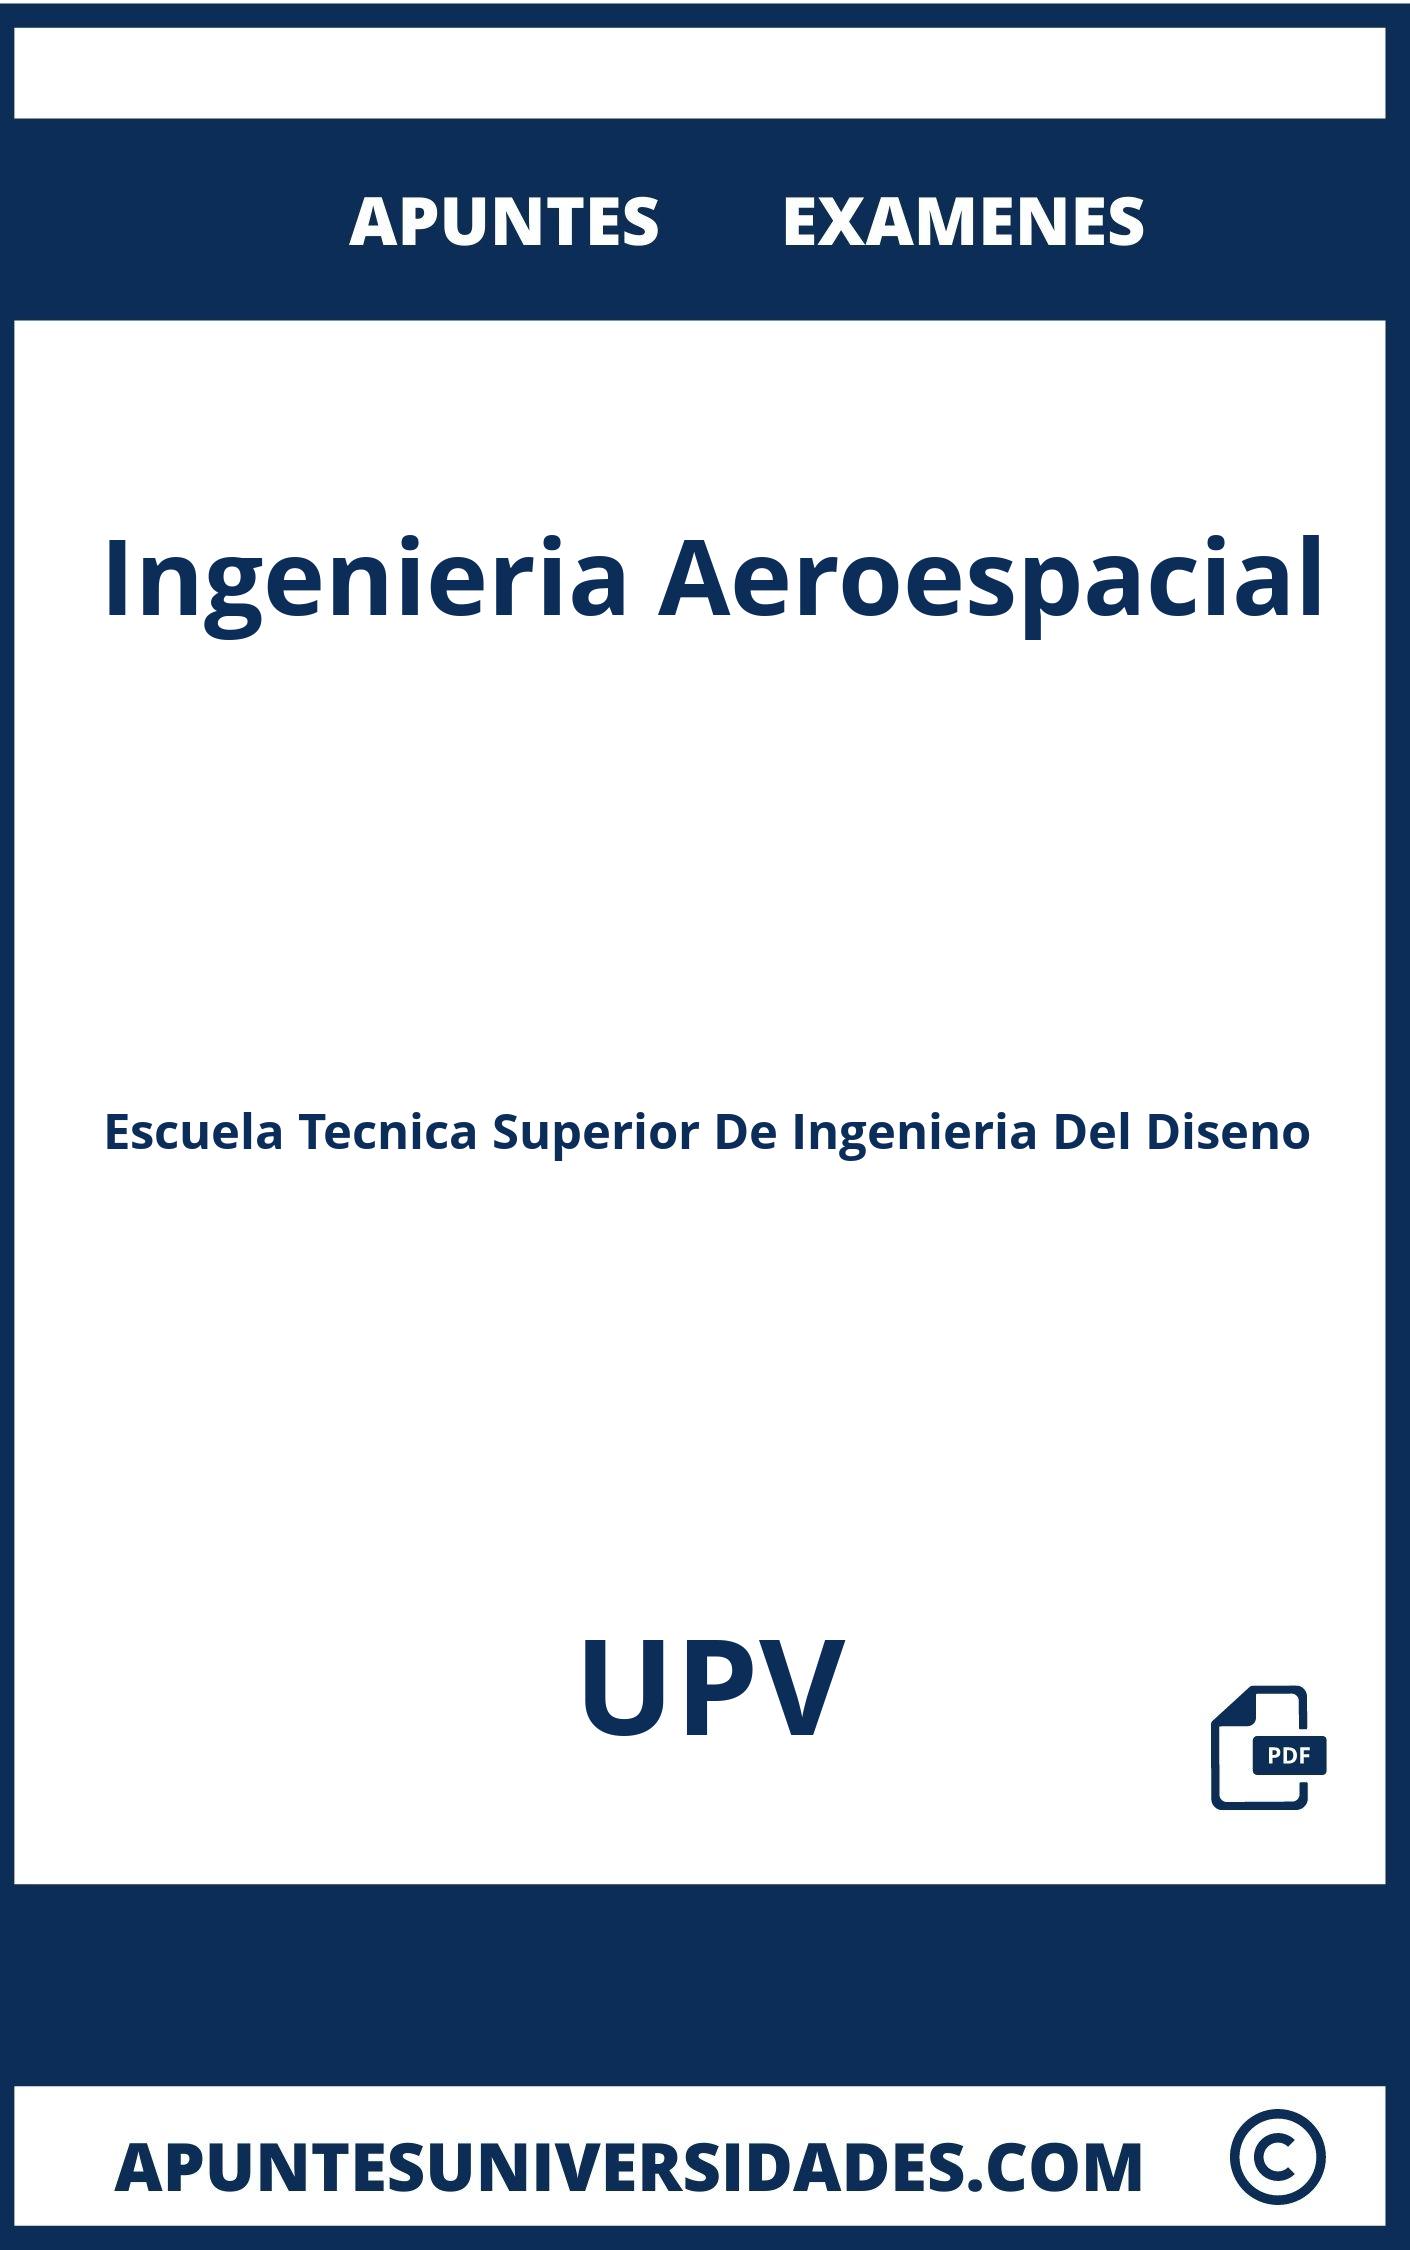 Examenes Apuntes Ingenieria Aeroespacial UPV